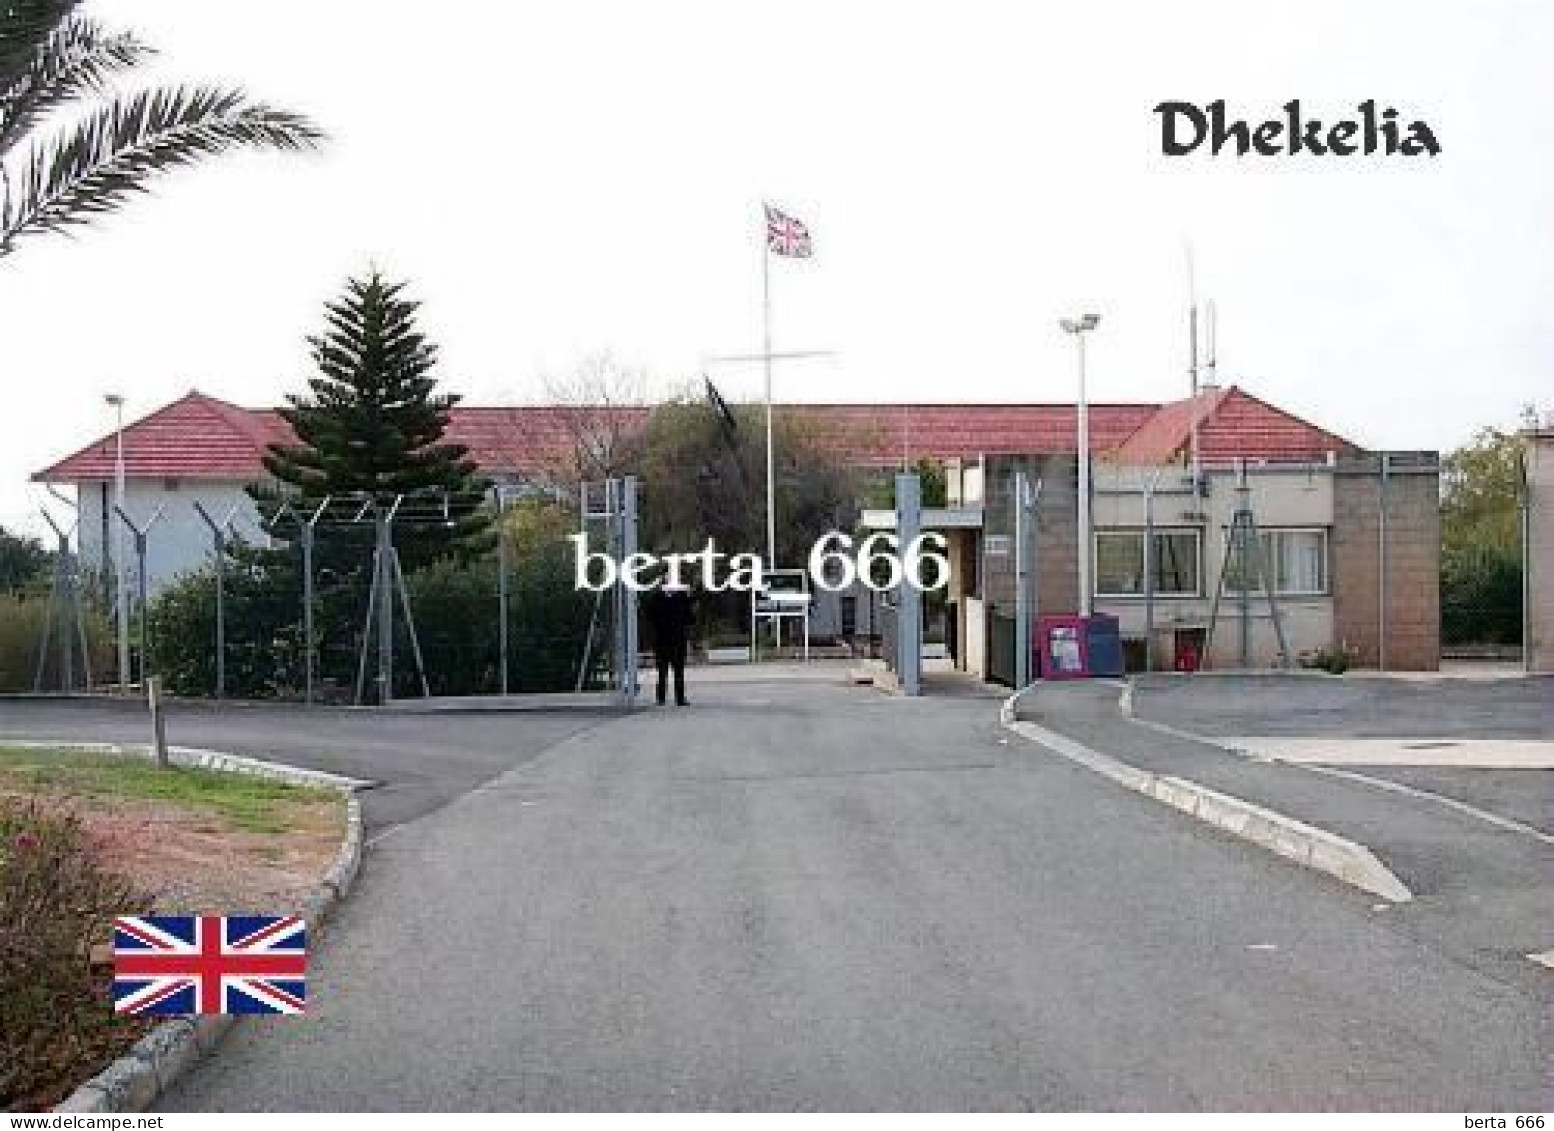 Dhekelia British Sovereign Base Cyprus New Postcard - Zypern